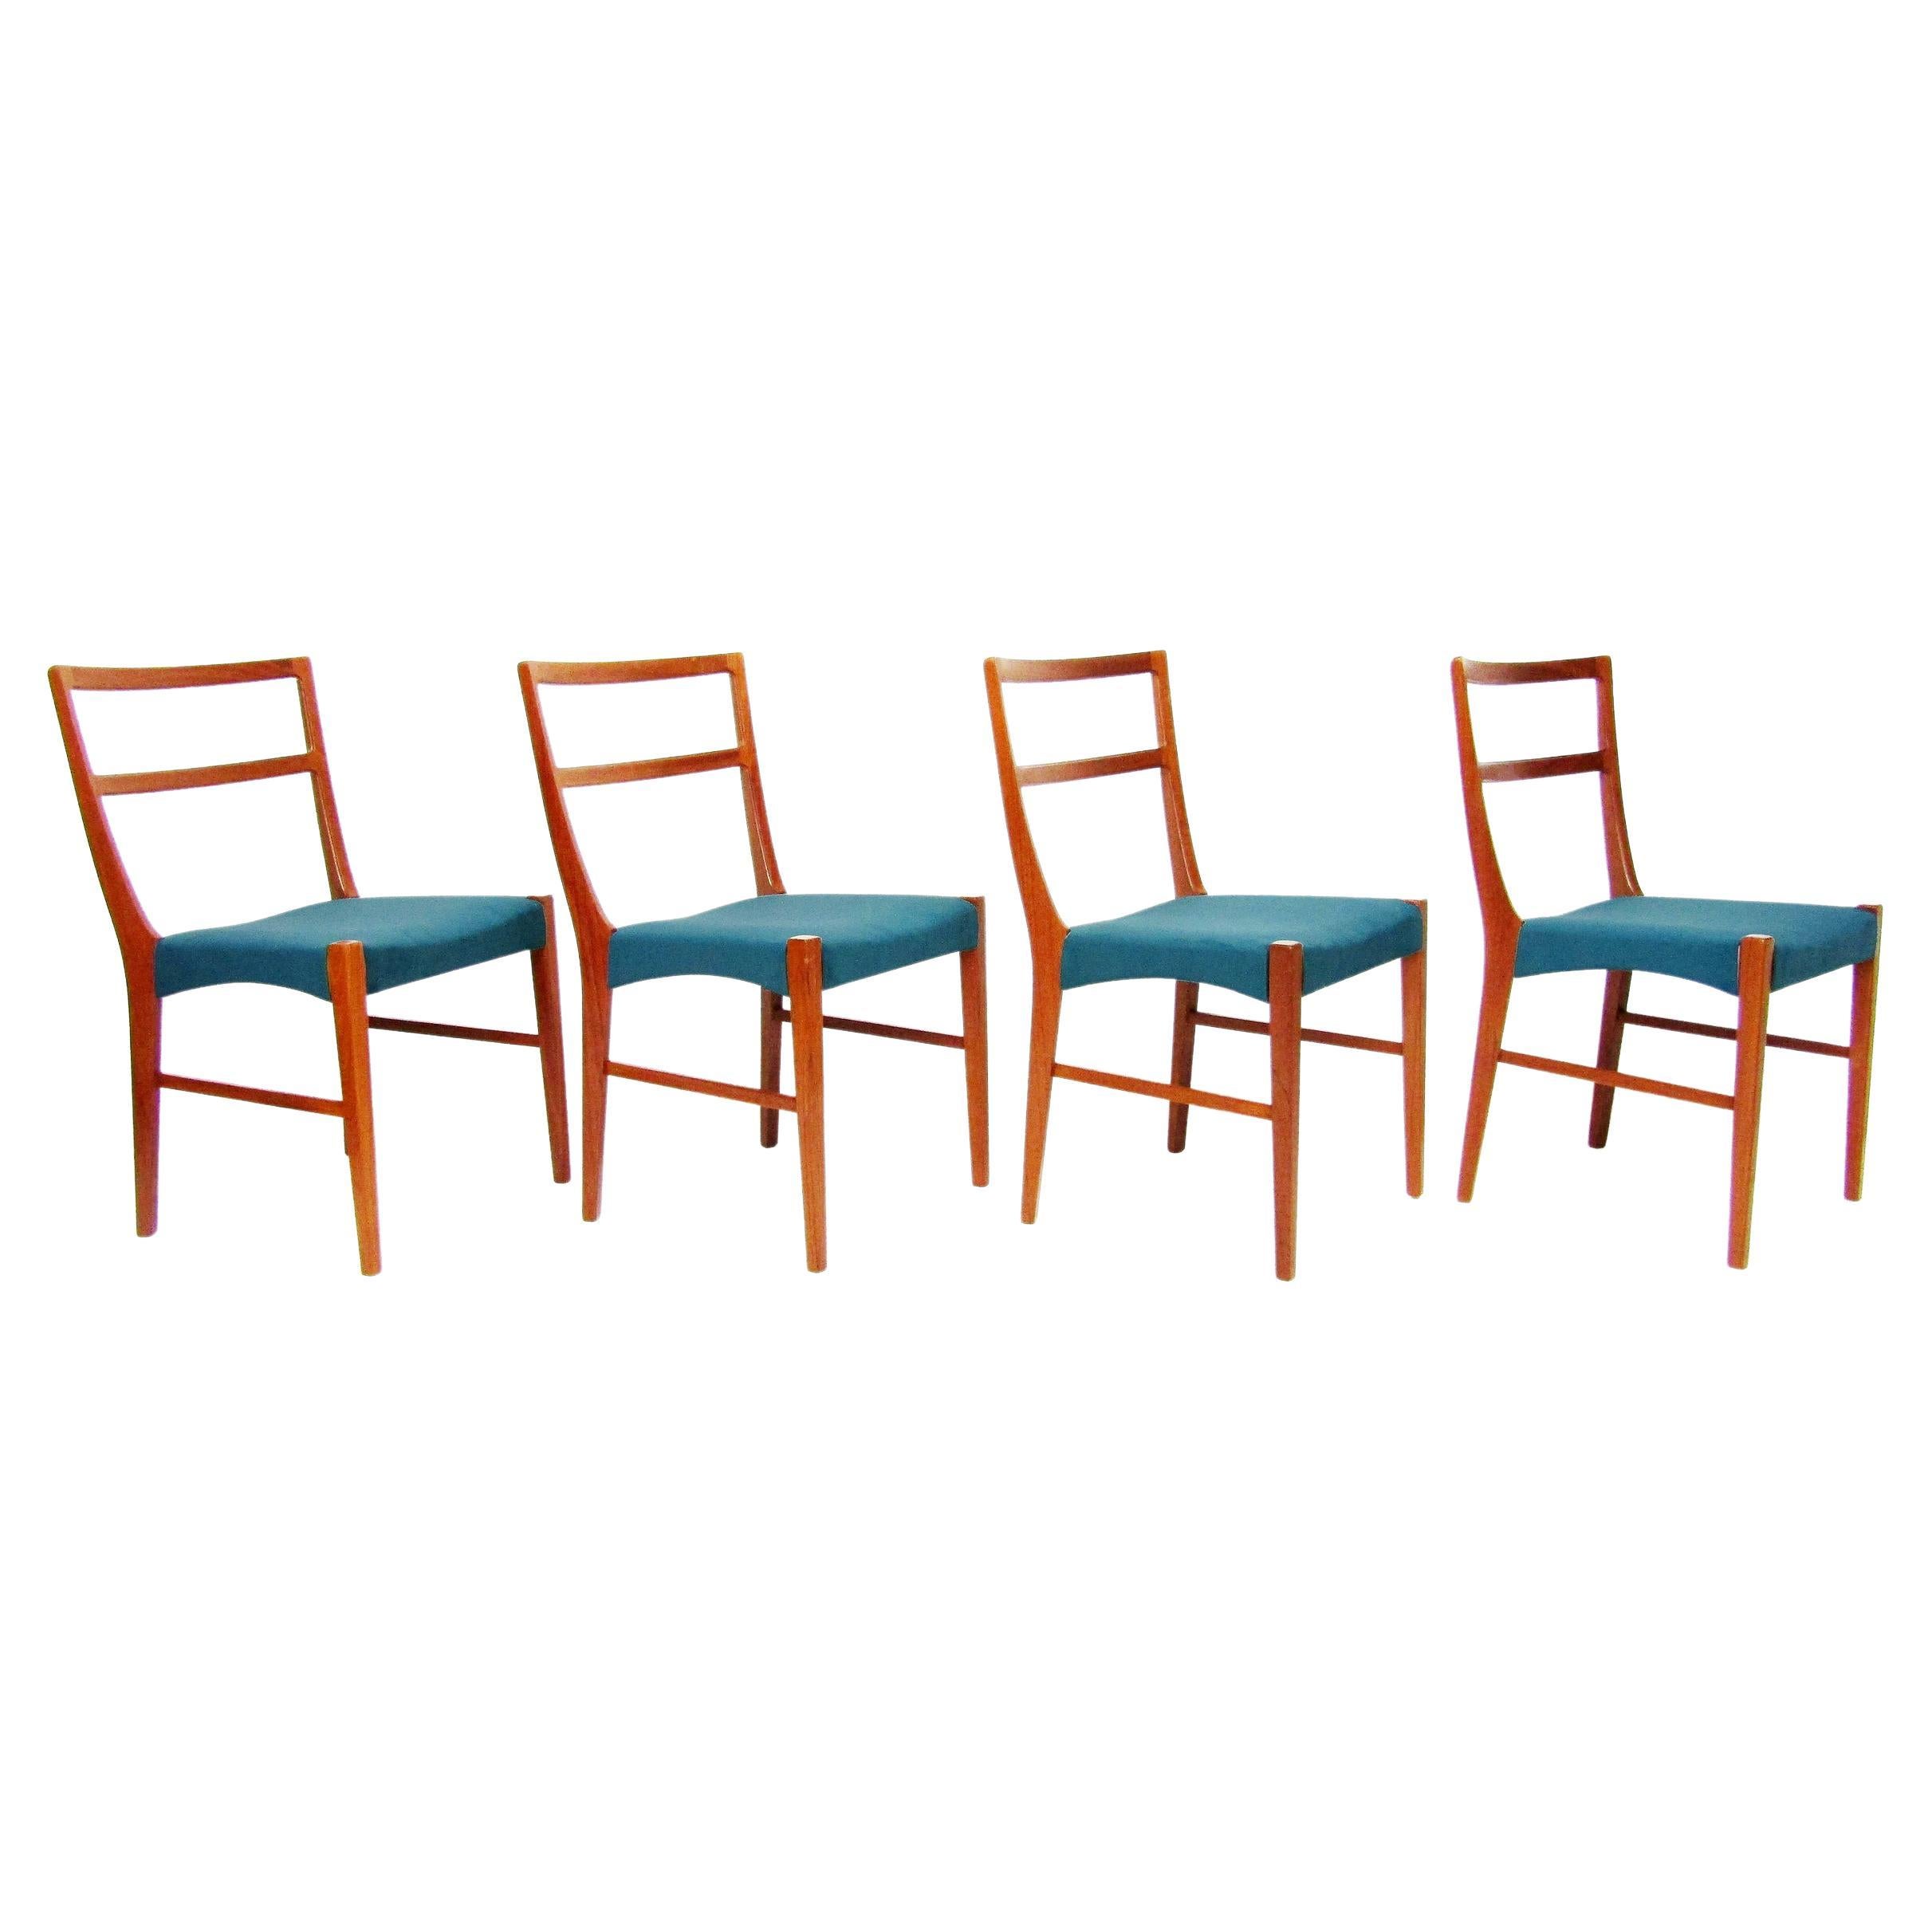 Four 1960s Danish Dining Chairs by Johannes Andersen for Bernhard Pedersen